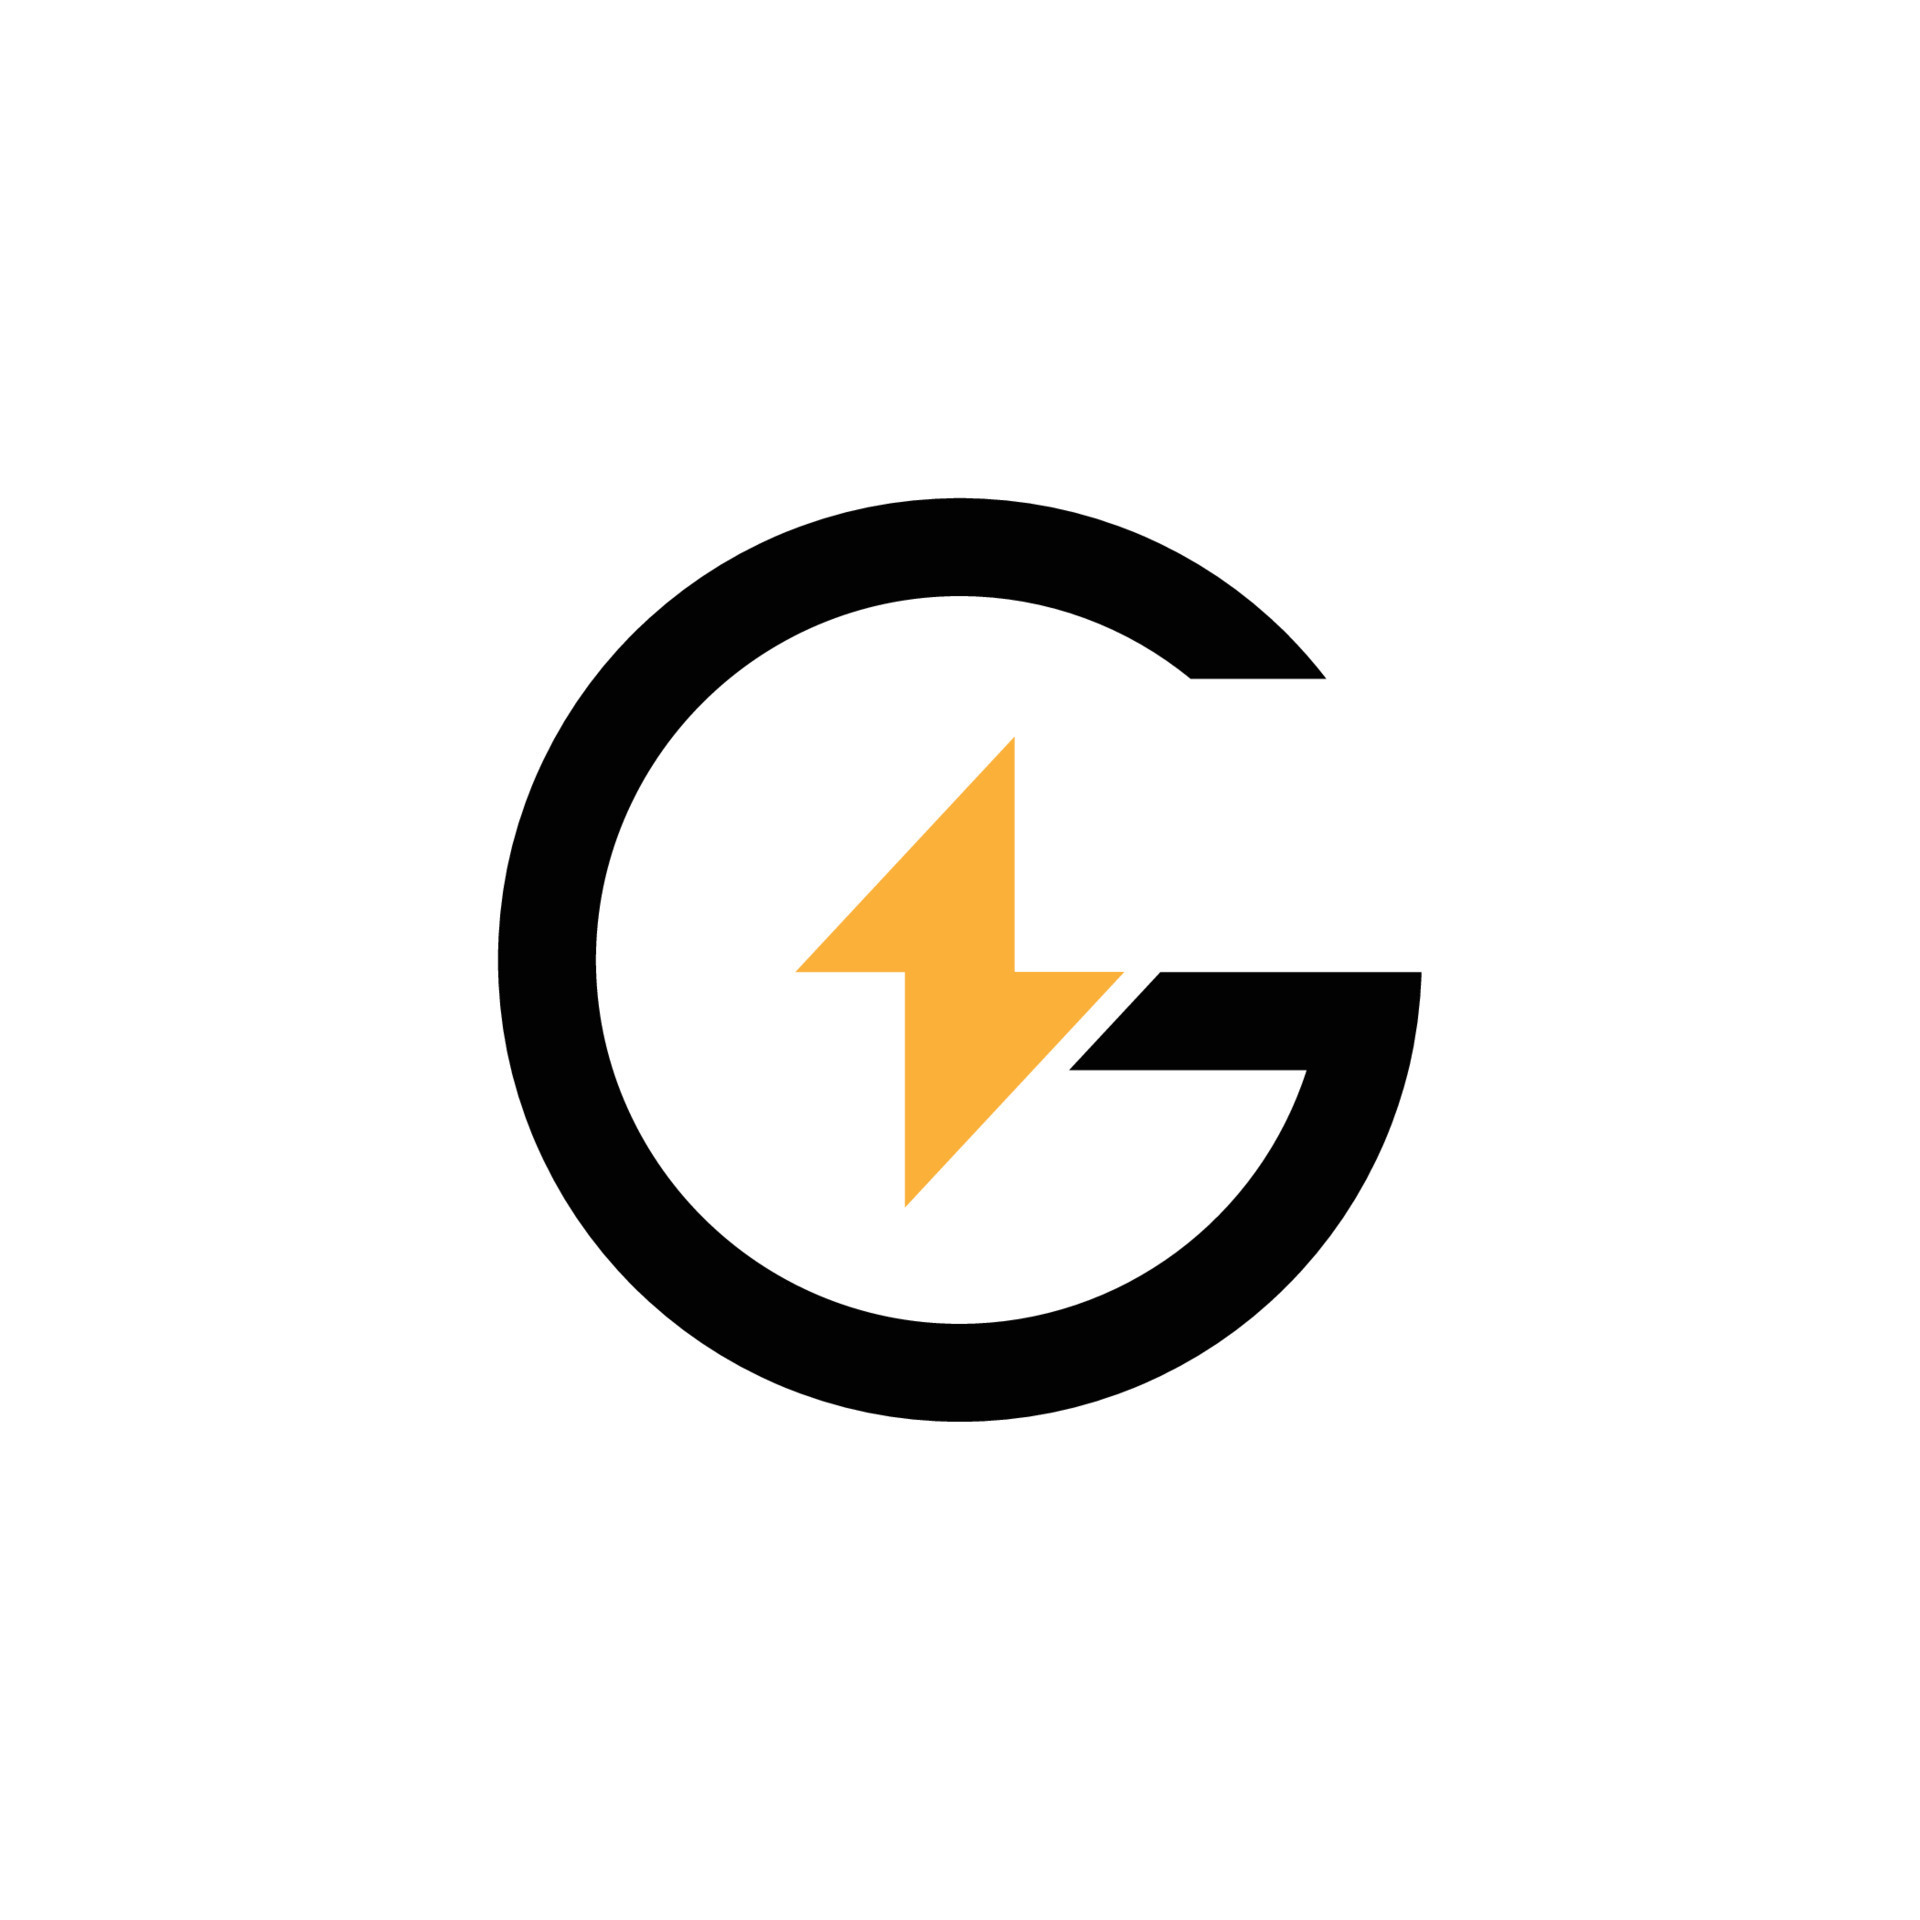 g logo modern letter tehnology label vector electric 24113608 Vector ...